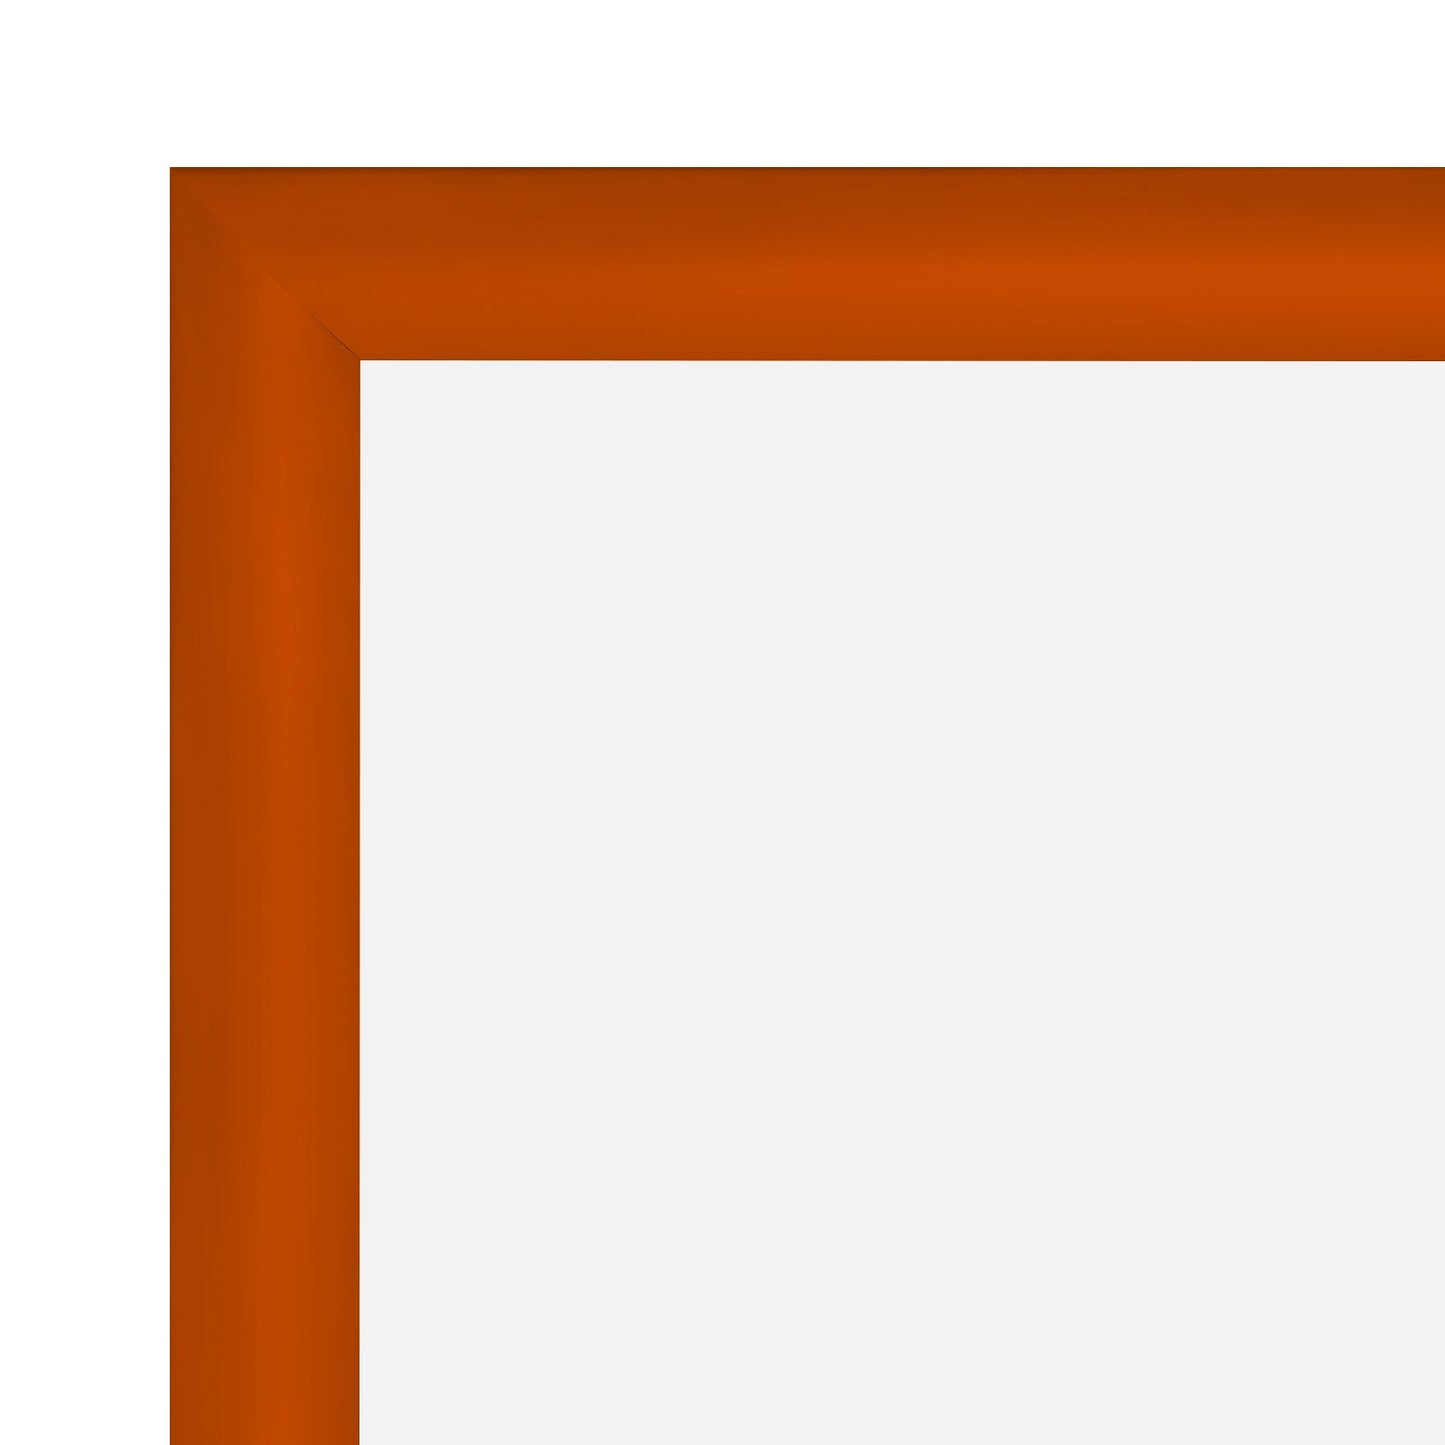 24x36 Orange SnapeZo® Snap Frame - 1.2" Profile - Snap Frames Direct